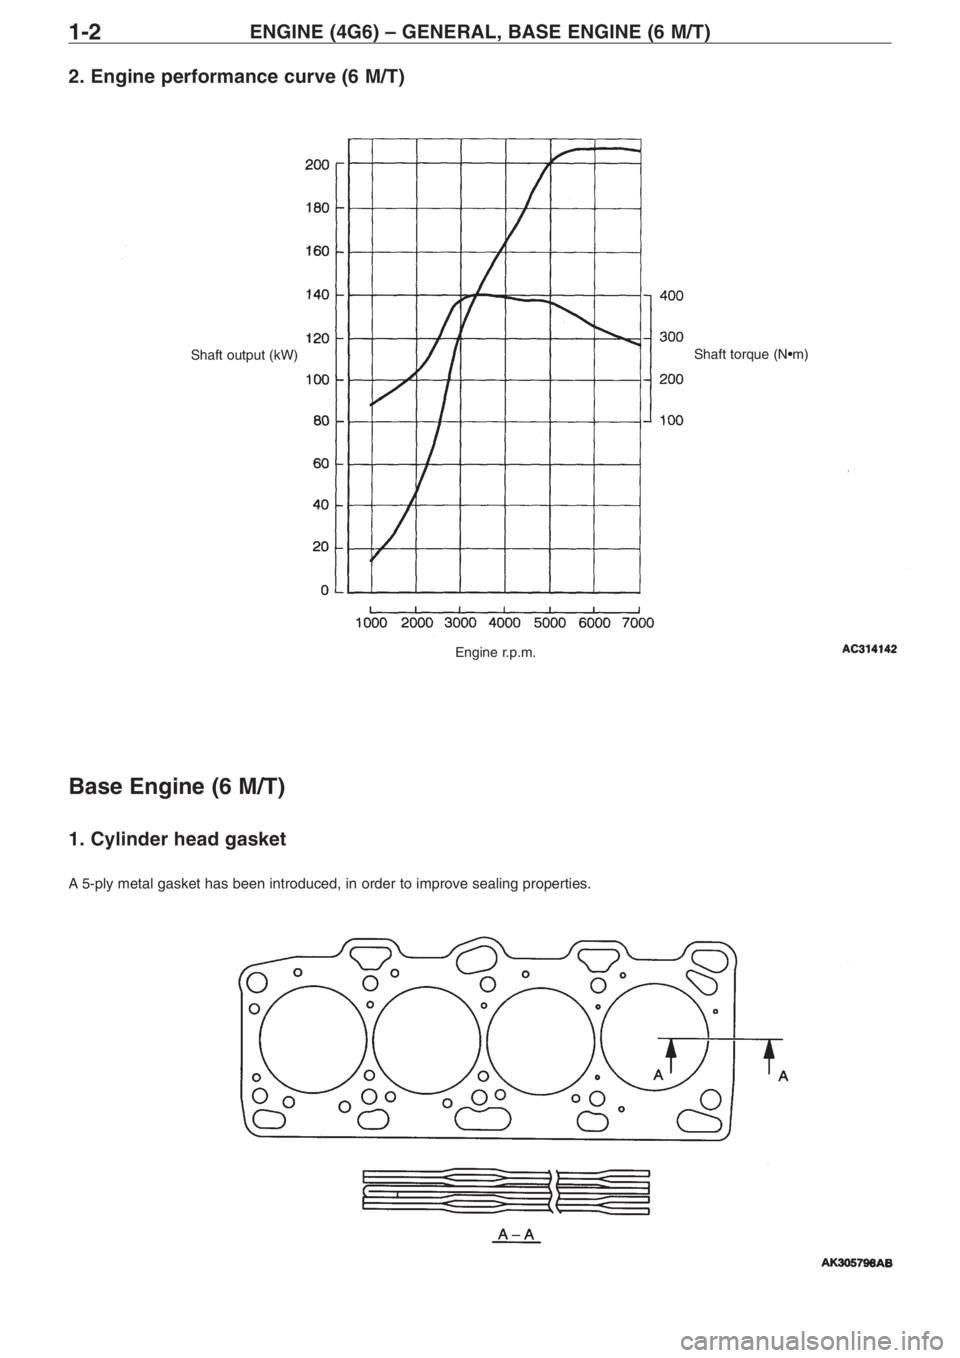 MITSUBISHI LANCER EVOLUTION VIII 2004  Workshop Manual ENGINE (4G6) – GENERAL, BASE ENGINE (6 M/T)1�2
2. Engine performance curve (6 M/T)
Base Engine (6 M/T)
1. Cylinder head gasket 
A5�ply metal gasket has been introduced, in order to improve sealing p